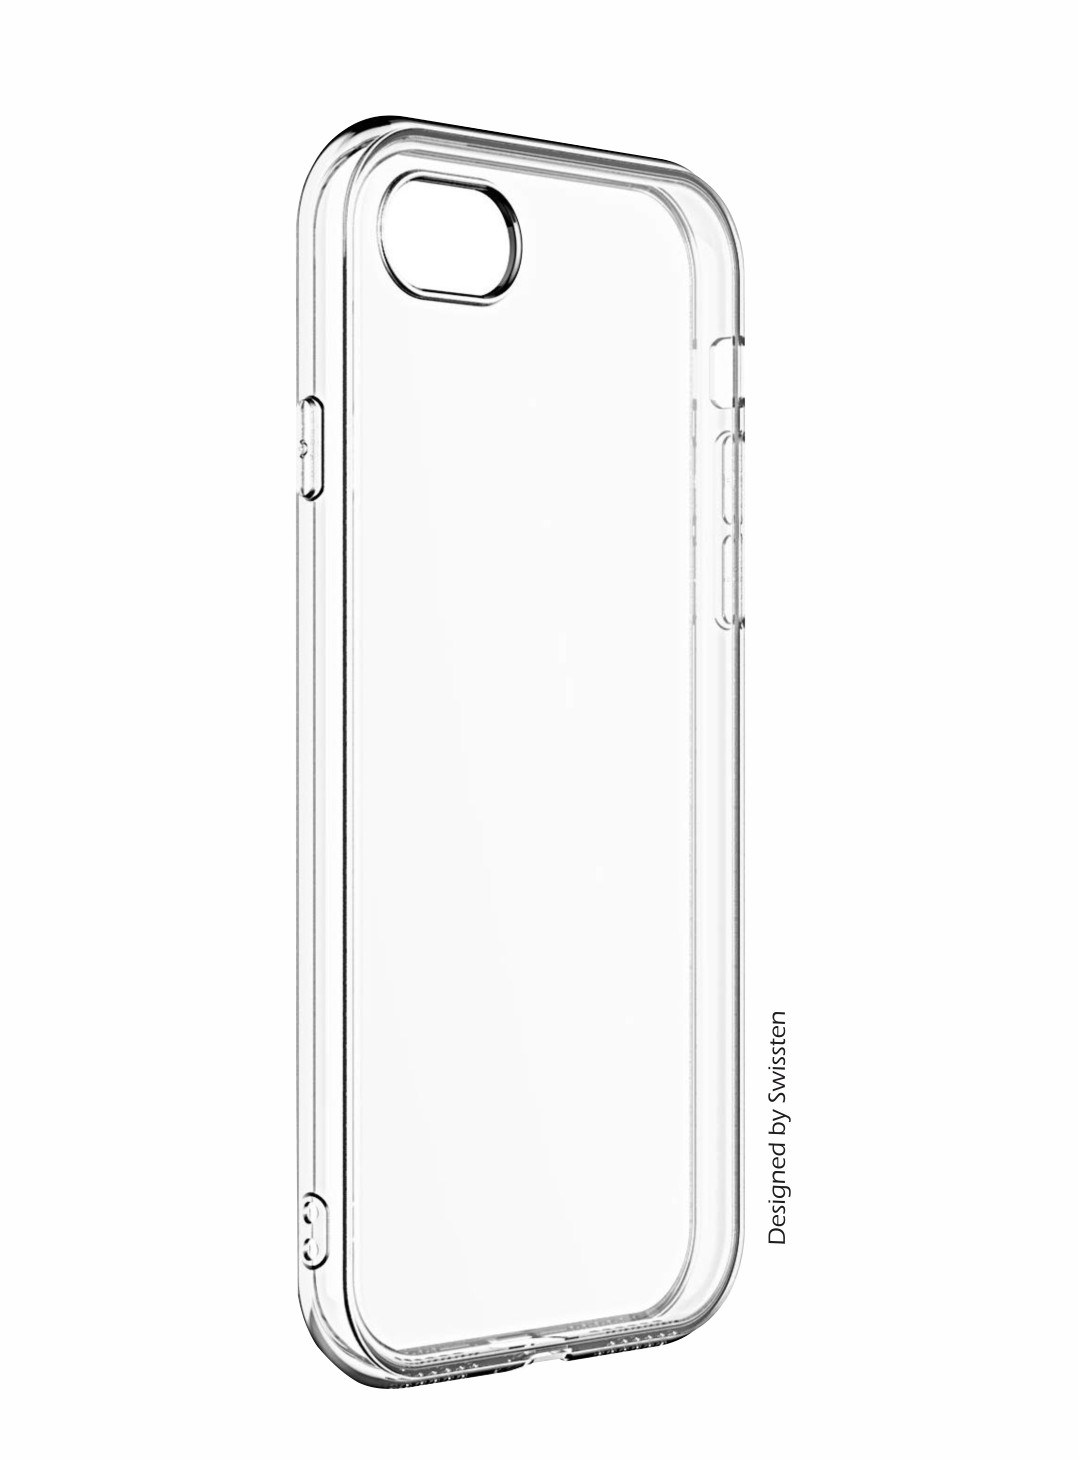 Swissten Clear Jelly Apple iPhone 12 Mini transparent thumb